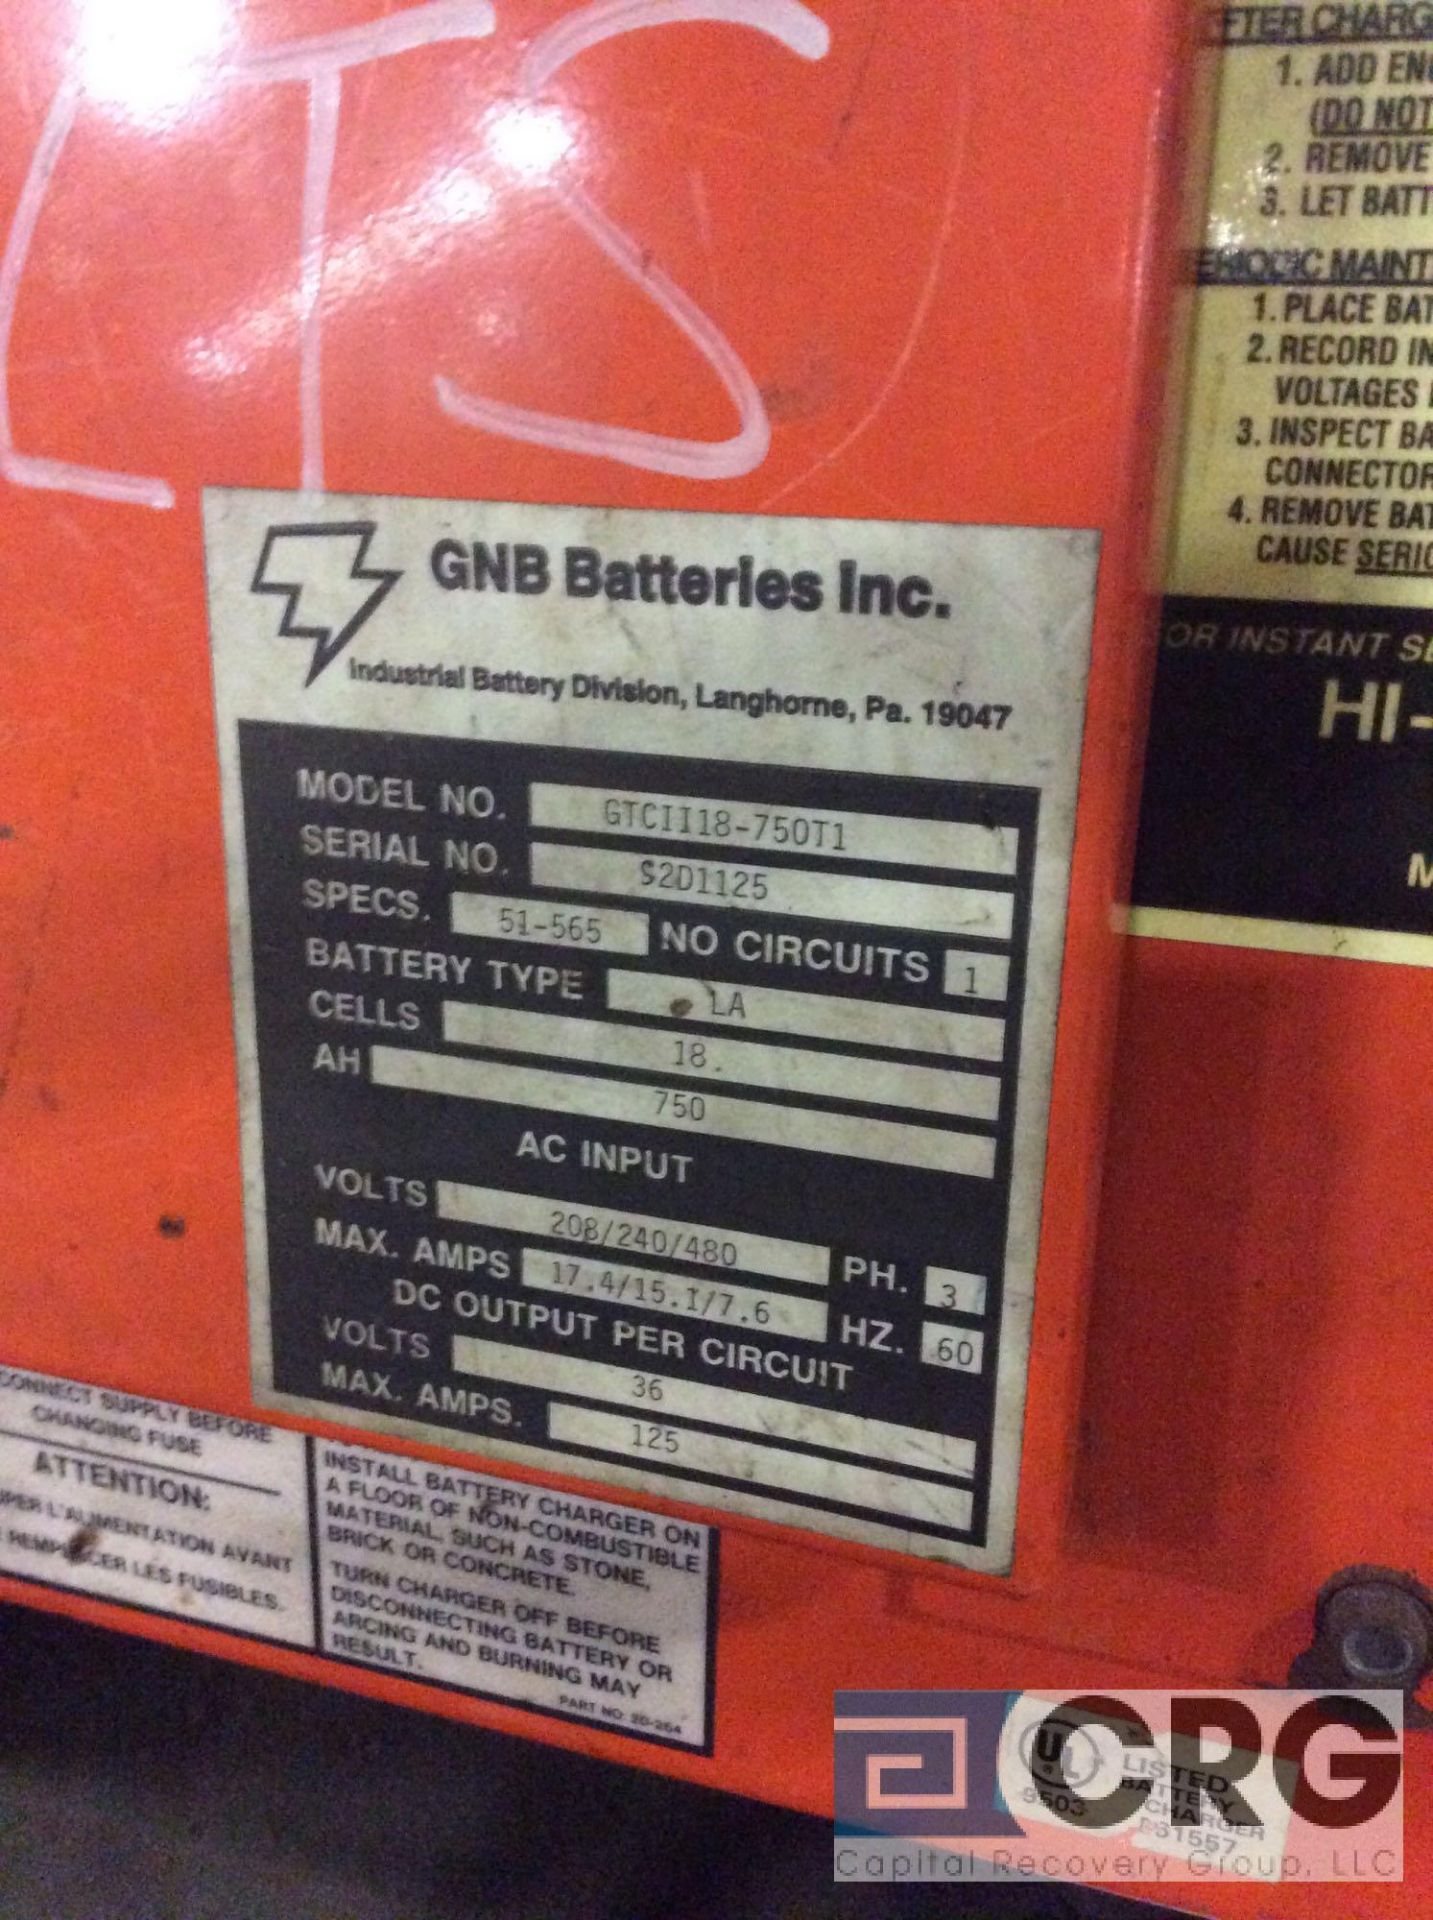 GNB 36 volt battery charger, m/n GTCII18-750T1 - Image 2 of 2